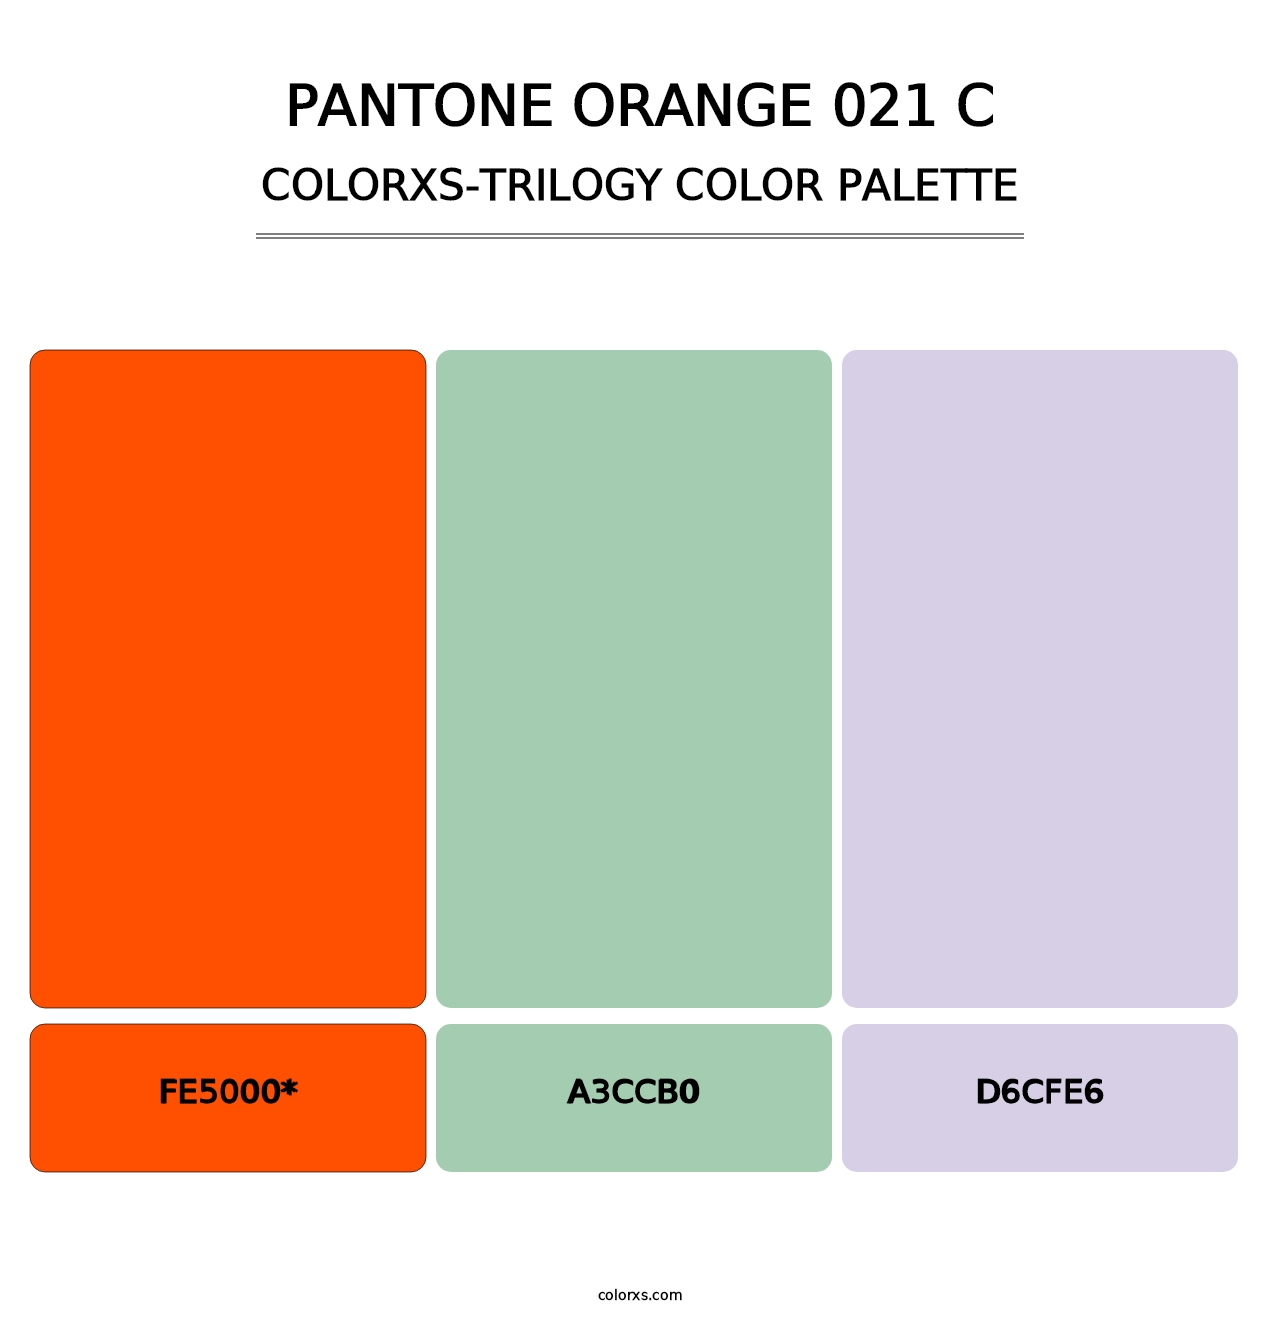 PANTONE Orange 021 C - Colorxs Trilogy Palette